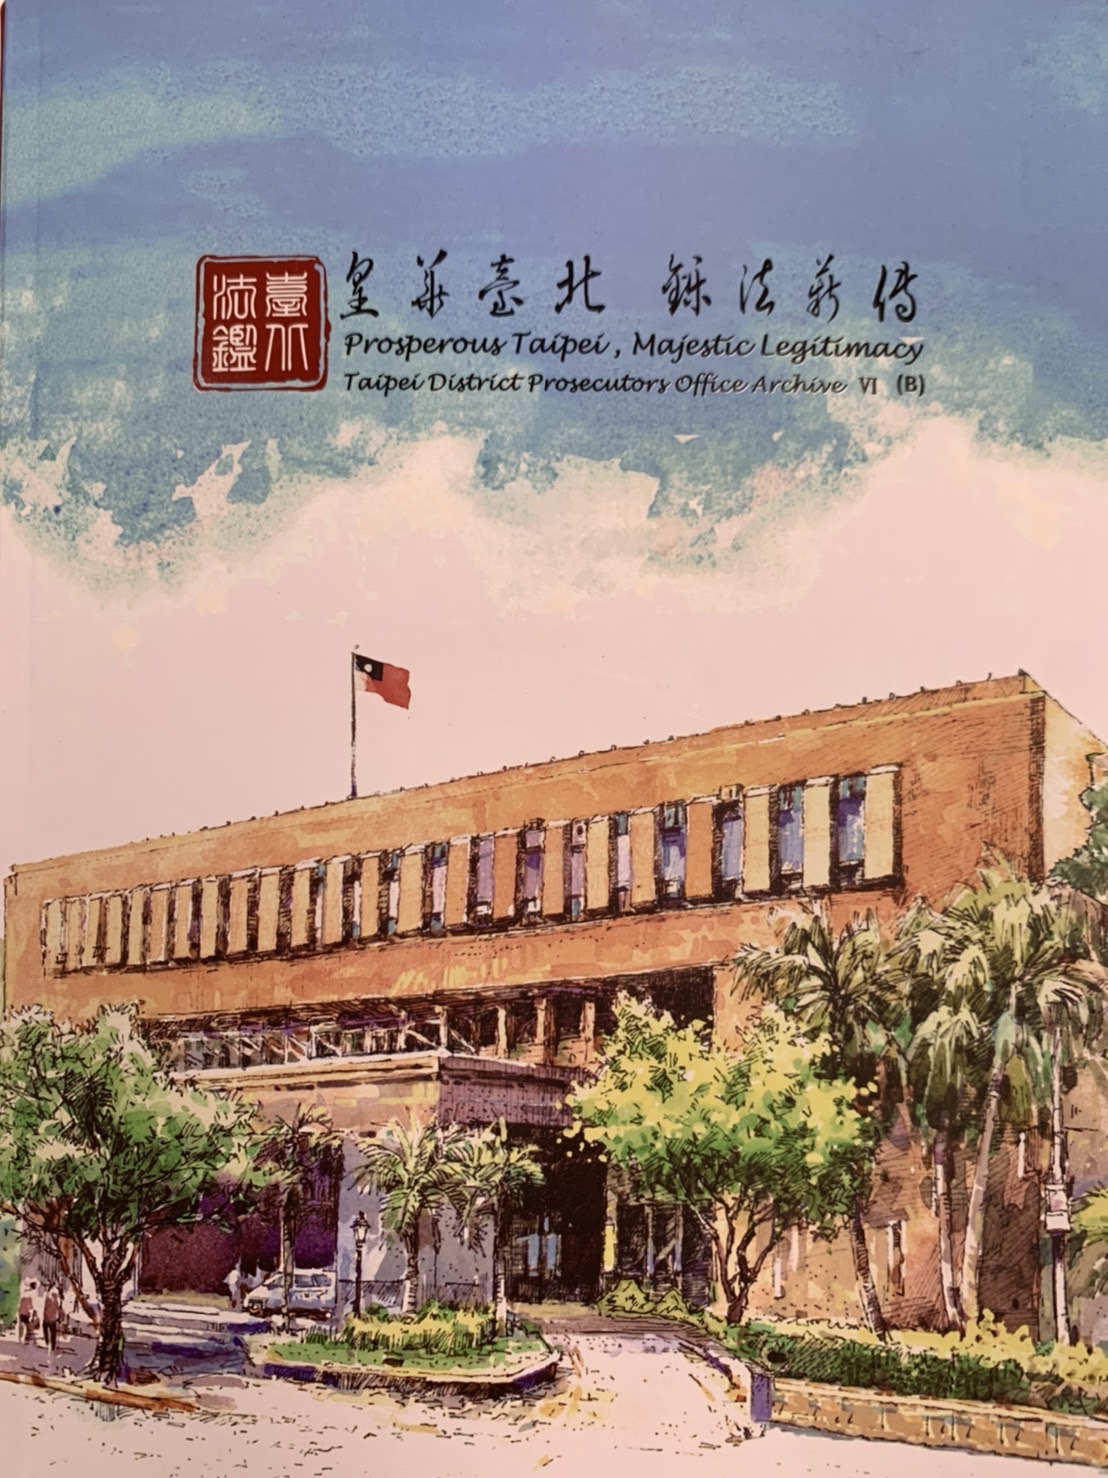 Annal of Taipei District Prosecutors office: Prosperous Taipei,Majestic Legitimacy / Taiwan Taipei District Prosecutors Office